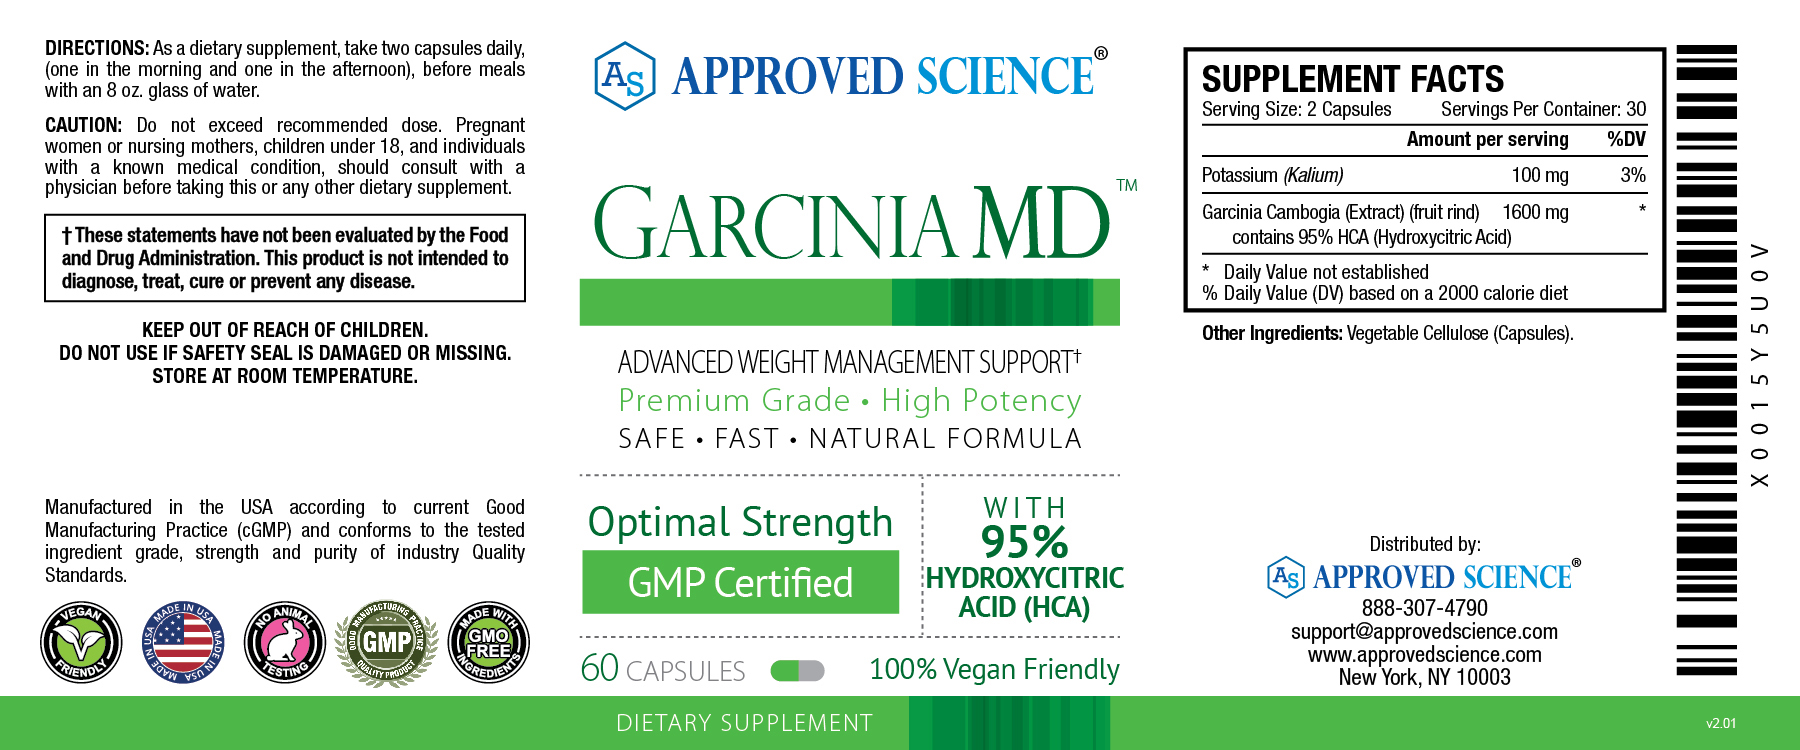 Garcinia MD Supplement Facts